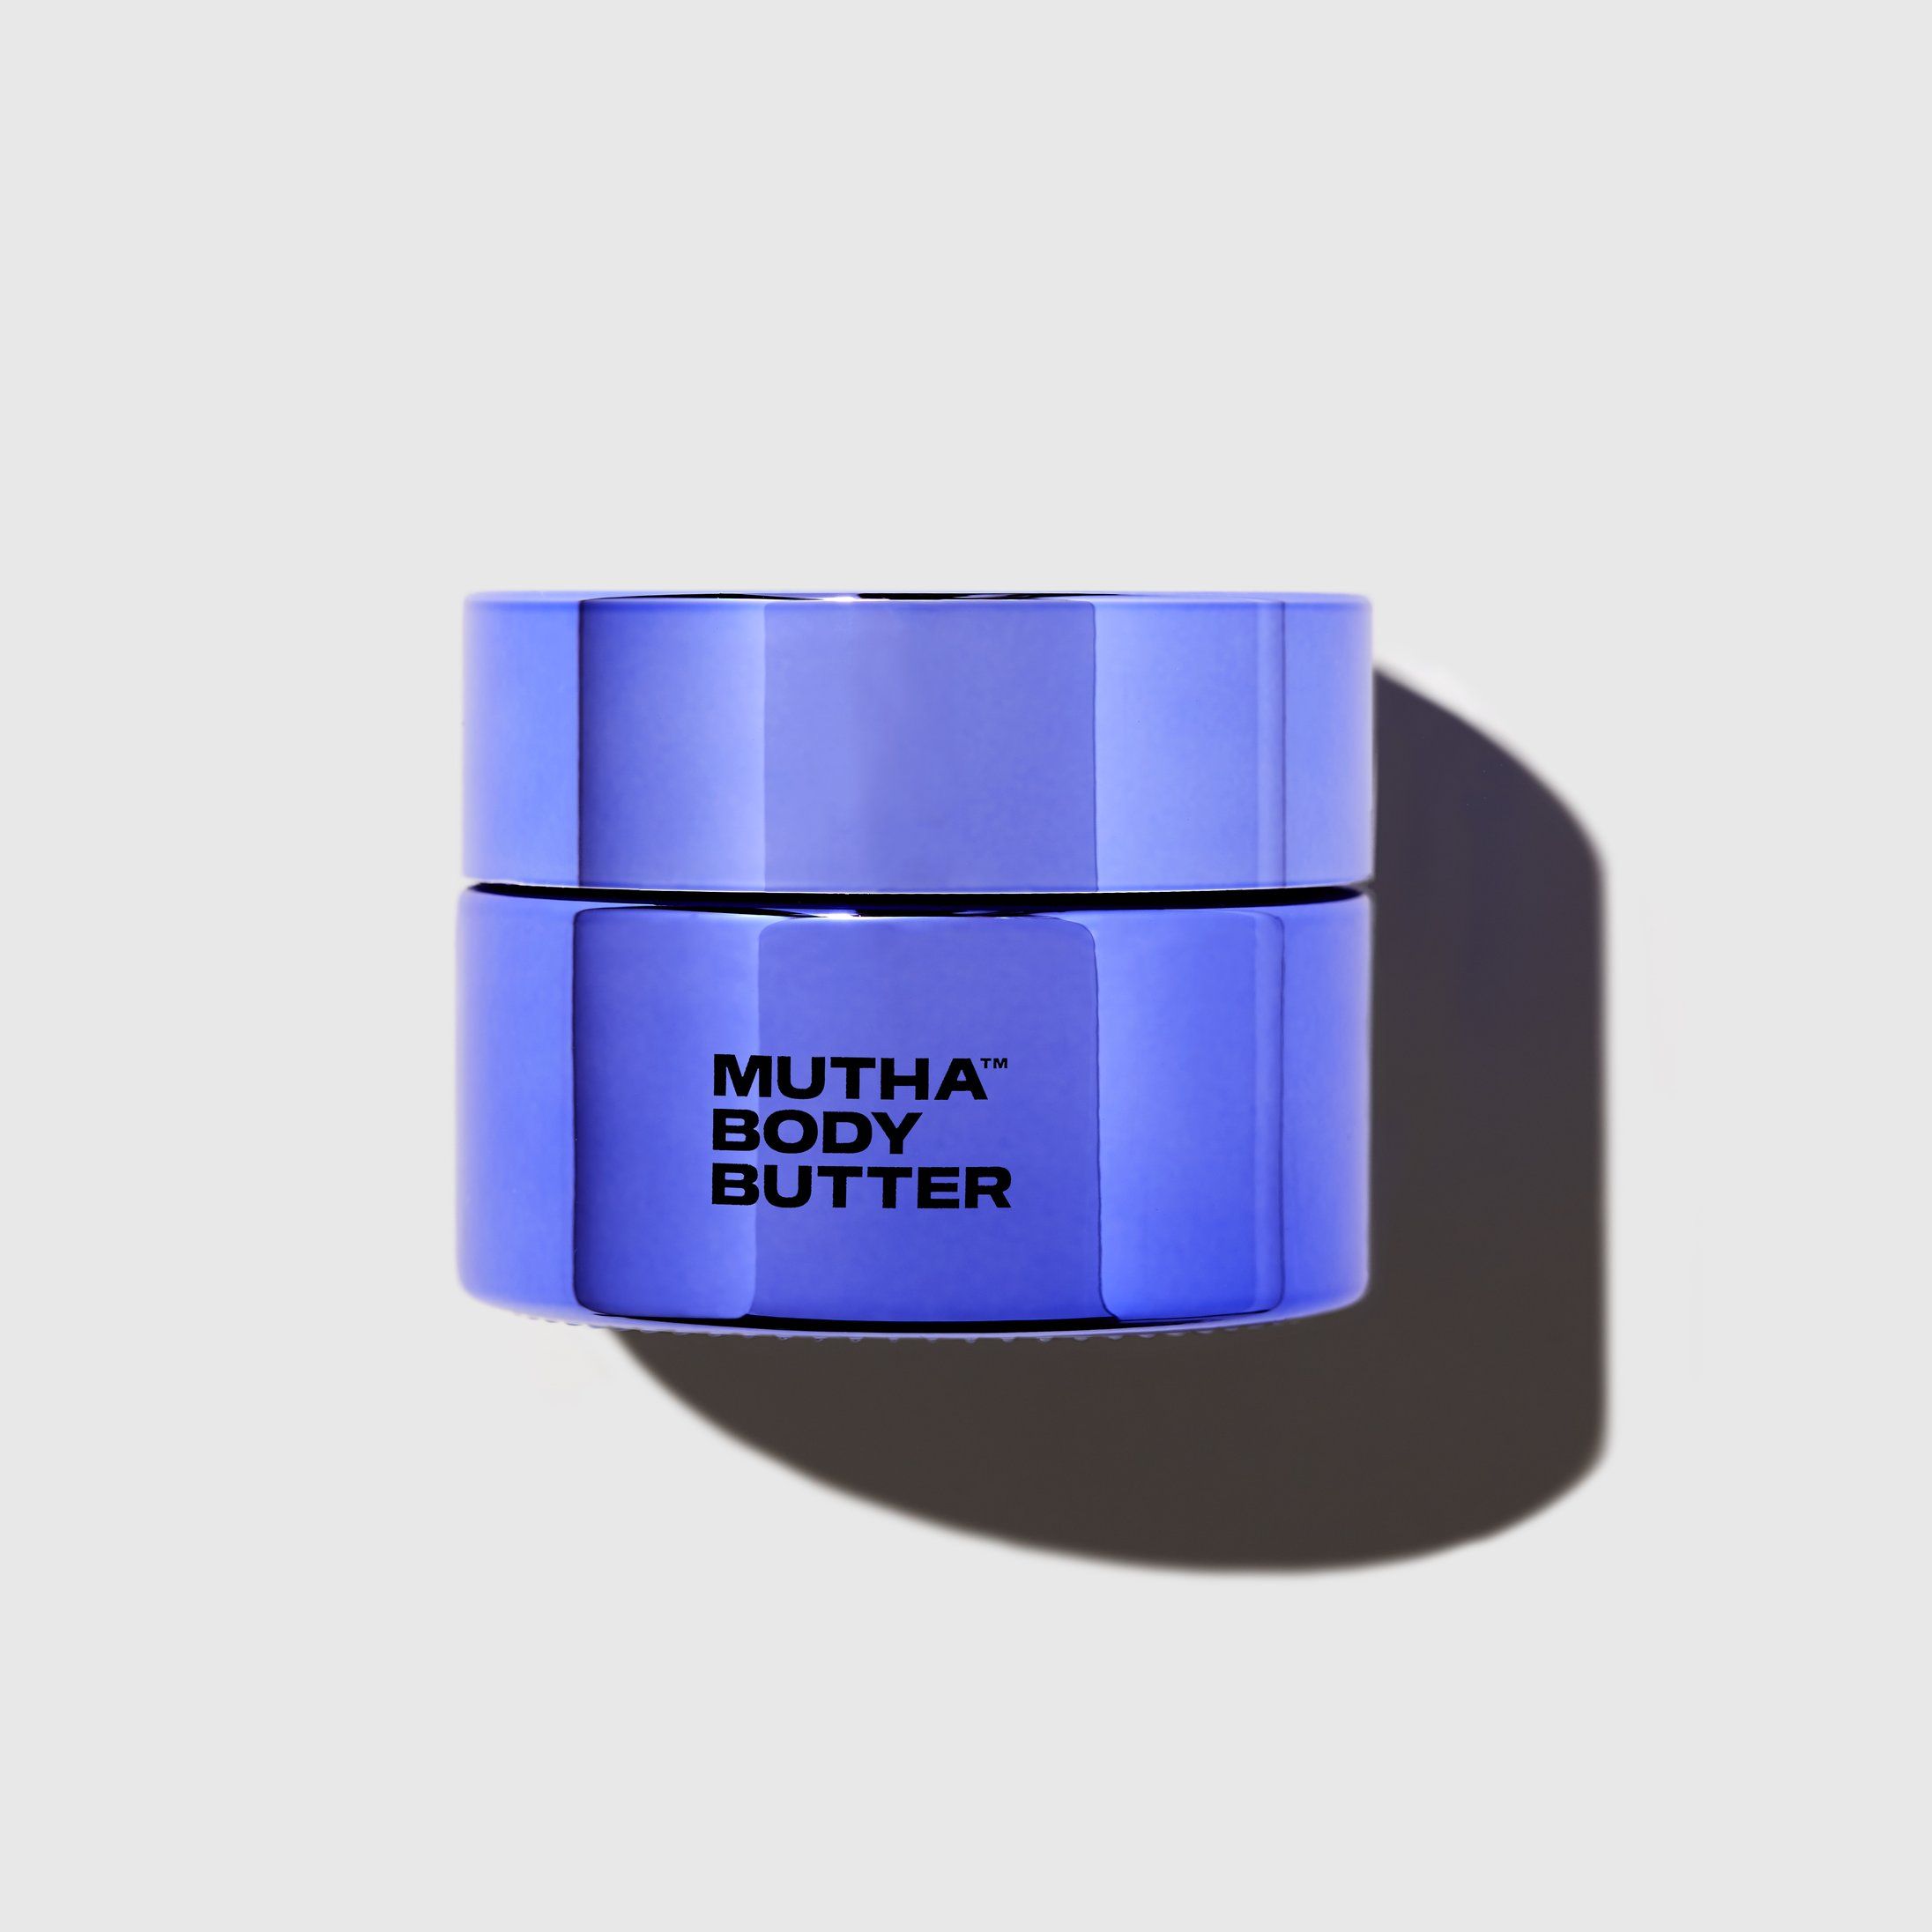 MUTHA™ Body Butter